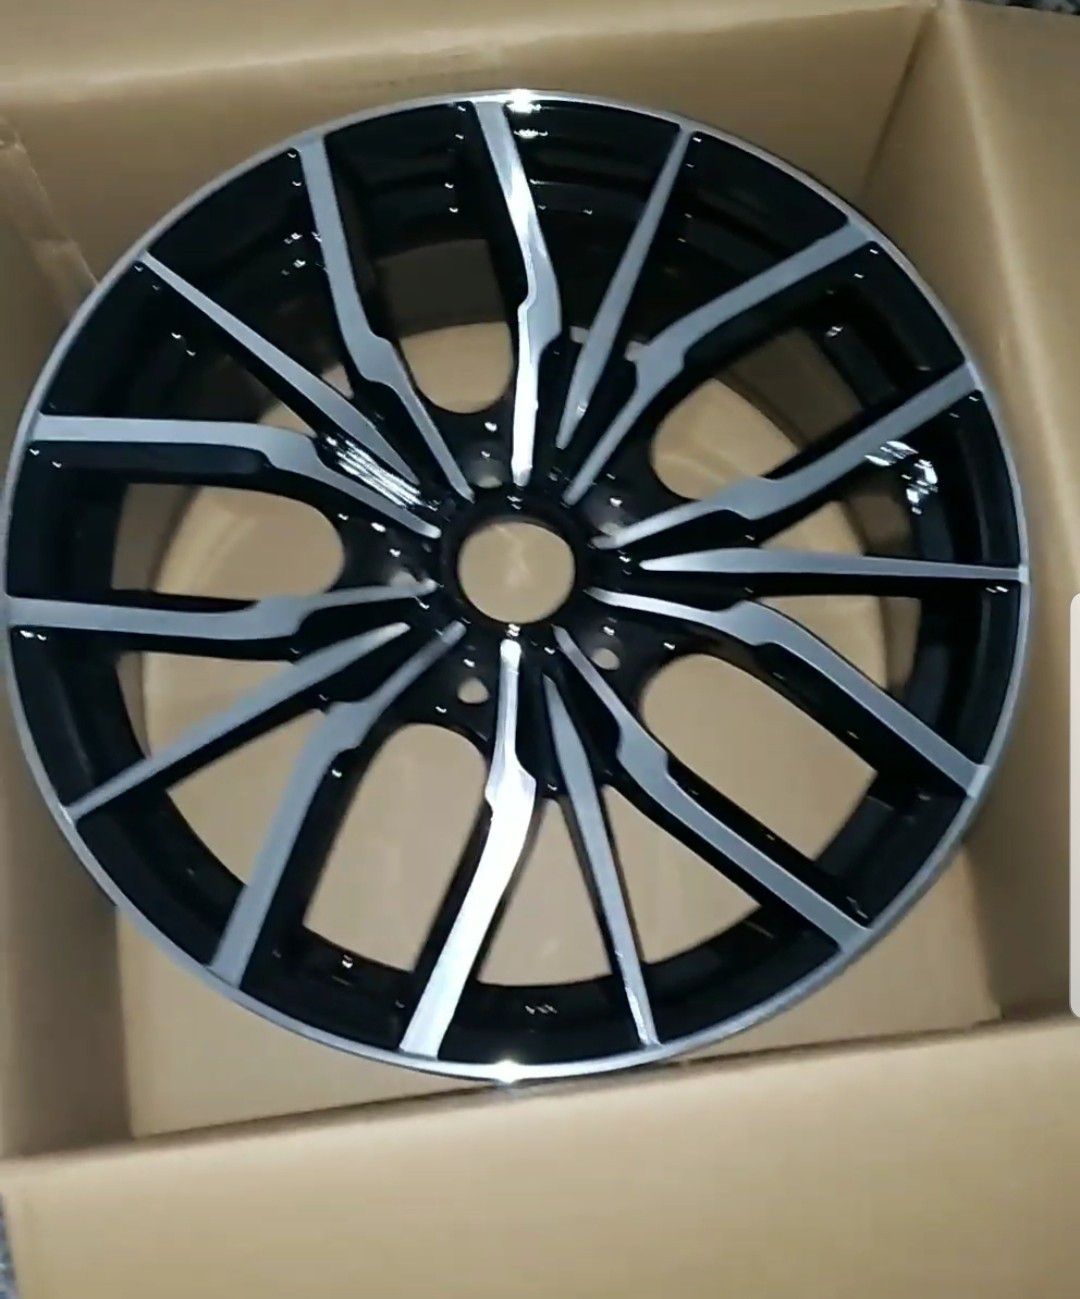 17x7.5" 5x114.3 Custom Wheels/Rims - SET of 4 - Machined Black - NEW!